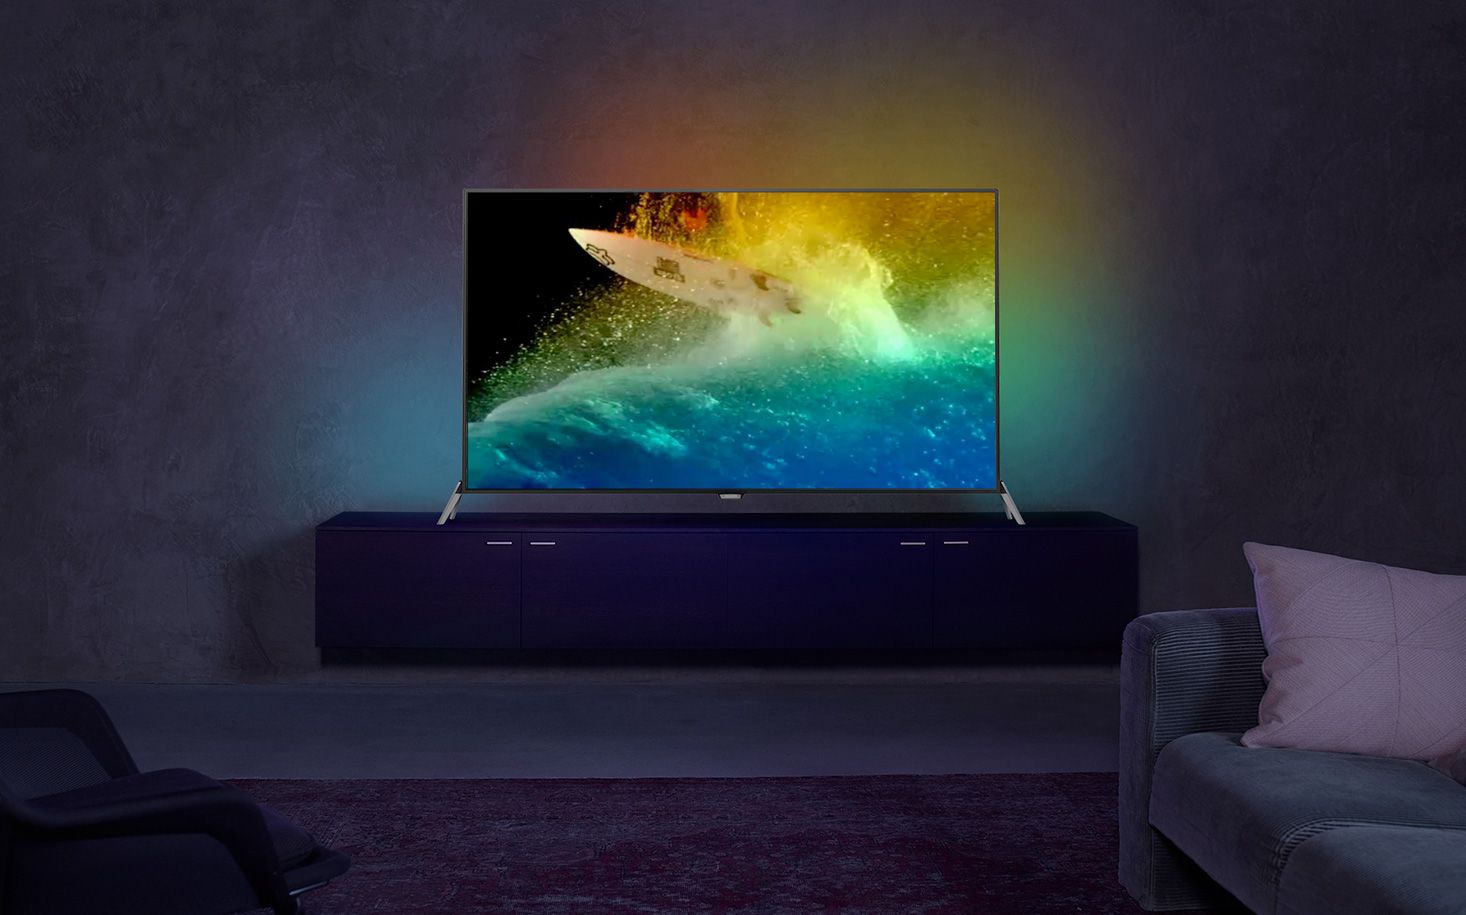 5 Best Philips TVs for May 2022 - Top Brands